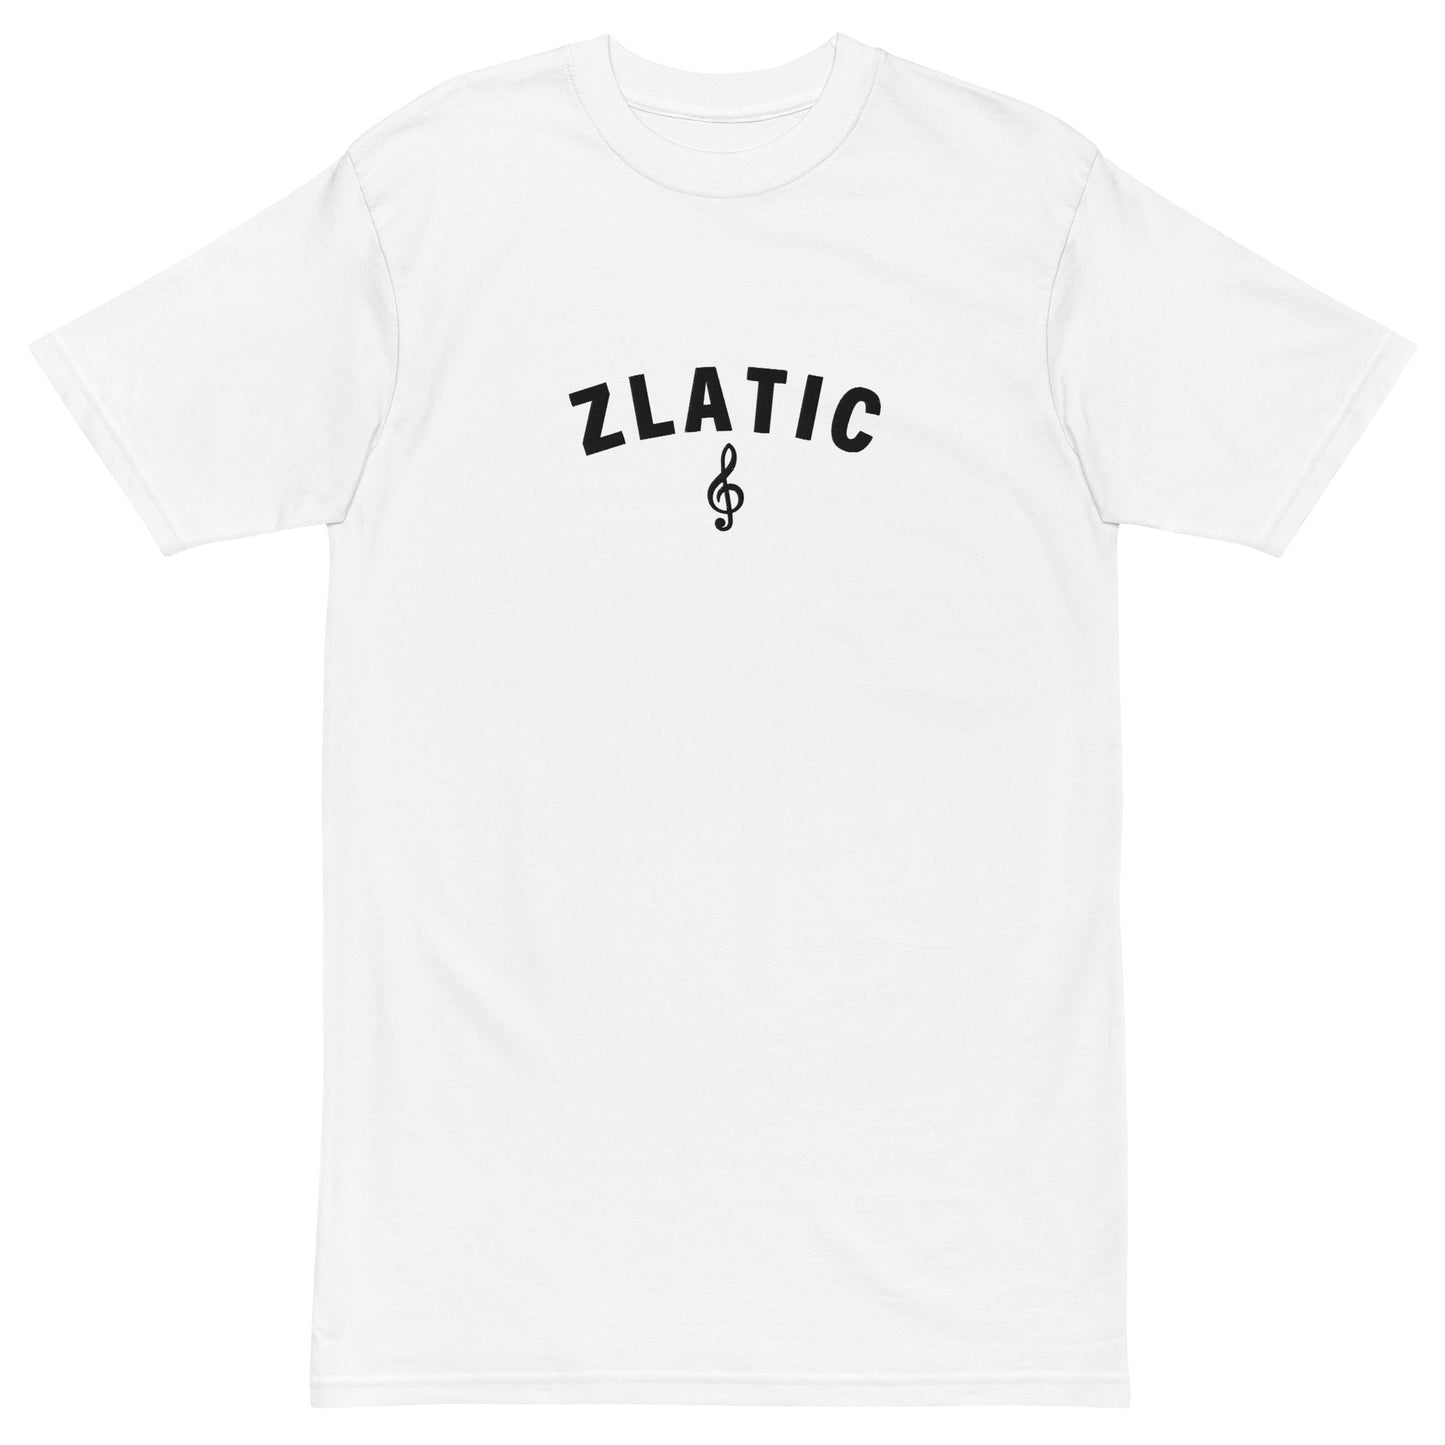 Zlatic Arc Embroidered Premium T-shirt